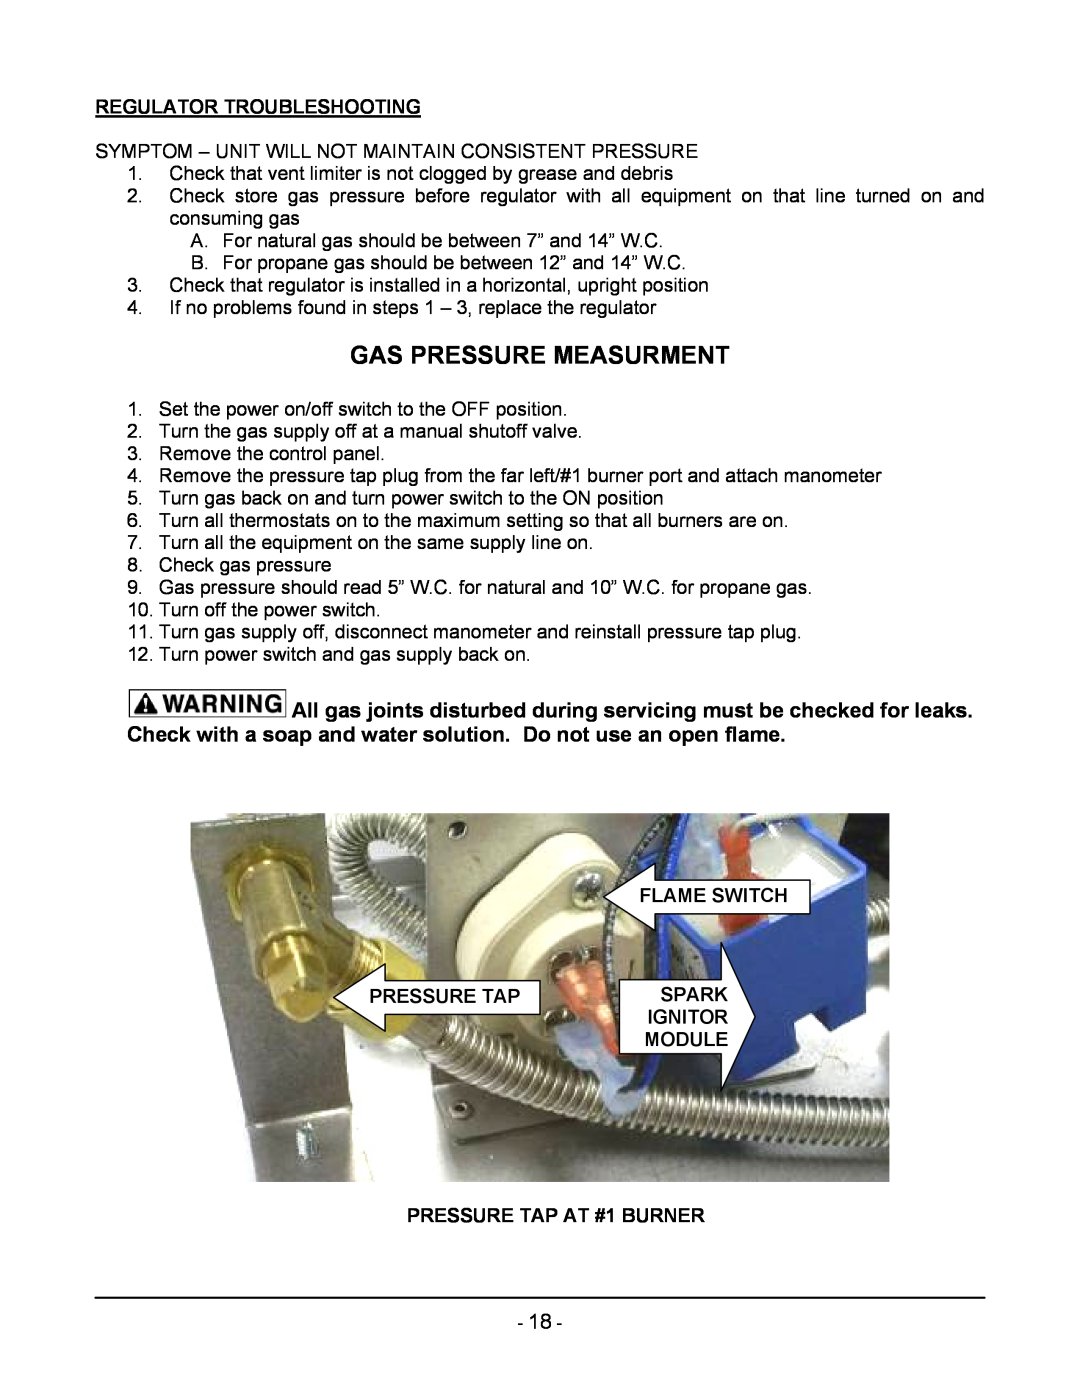 Vulcan-Hart ML-136221-00G24 manual Gas Pressure Measurment, Regulator Troubleshooting, Flame Switch, Pressure Tap, Spark 